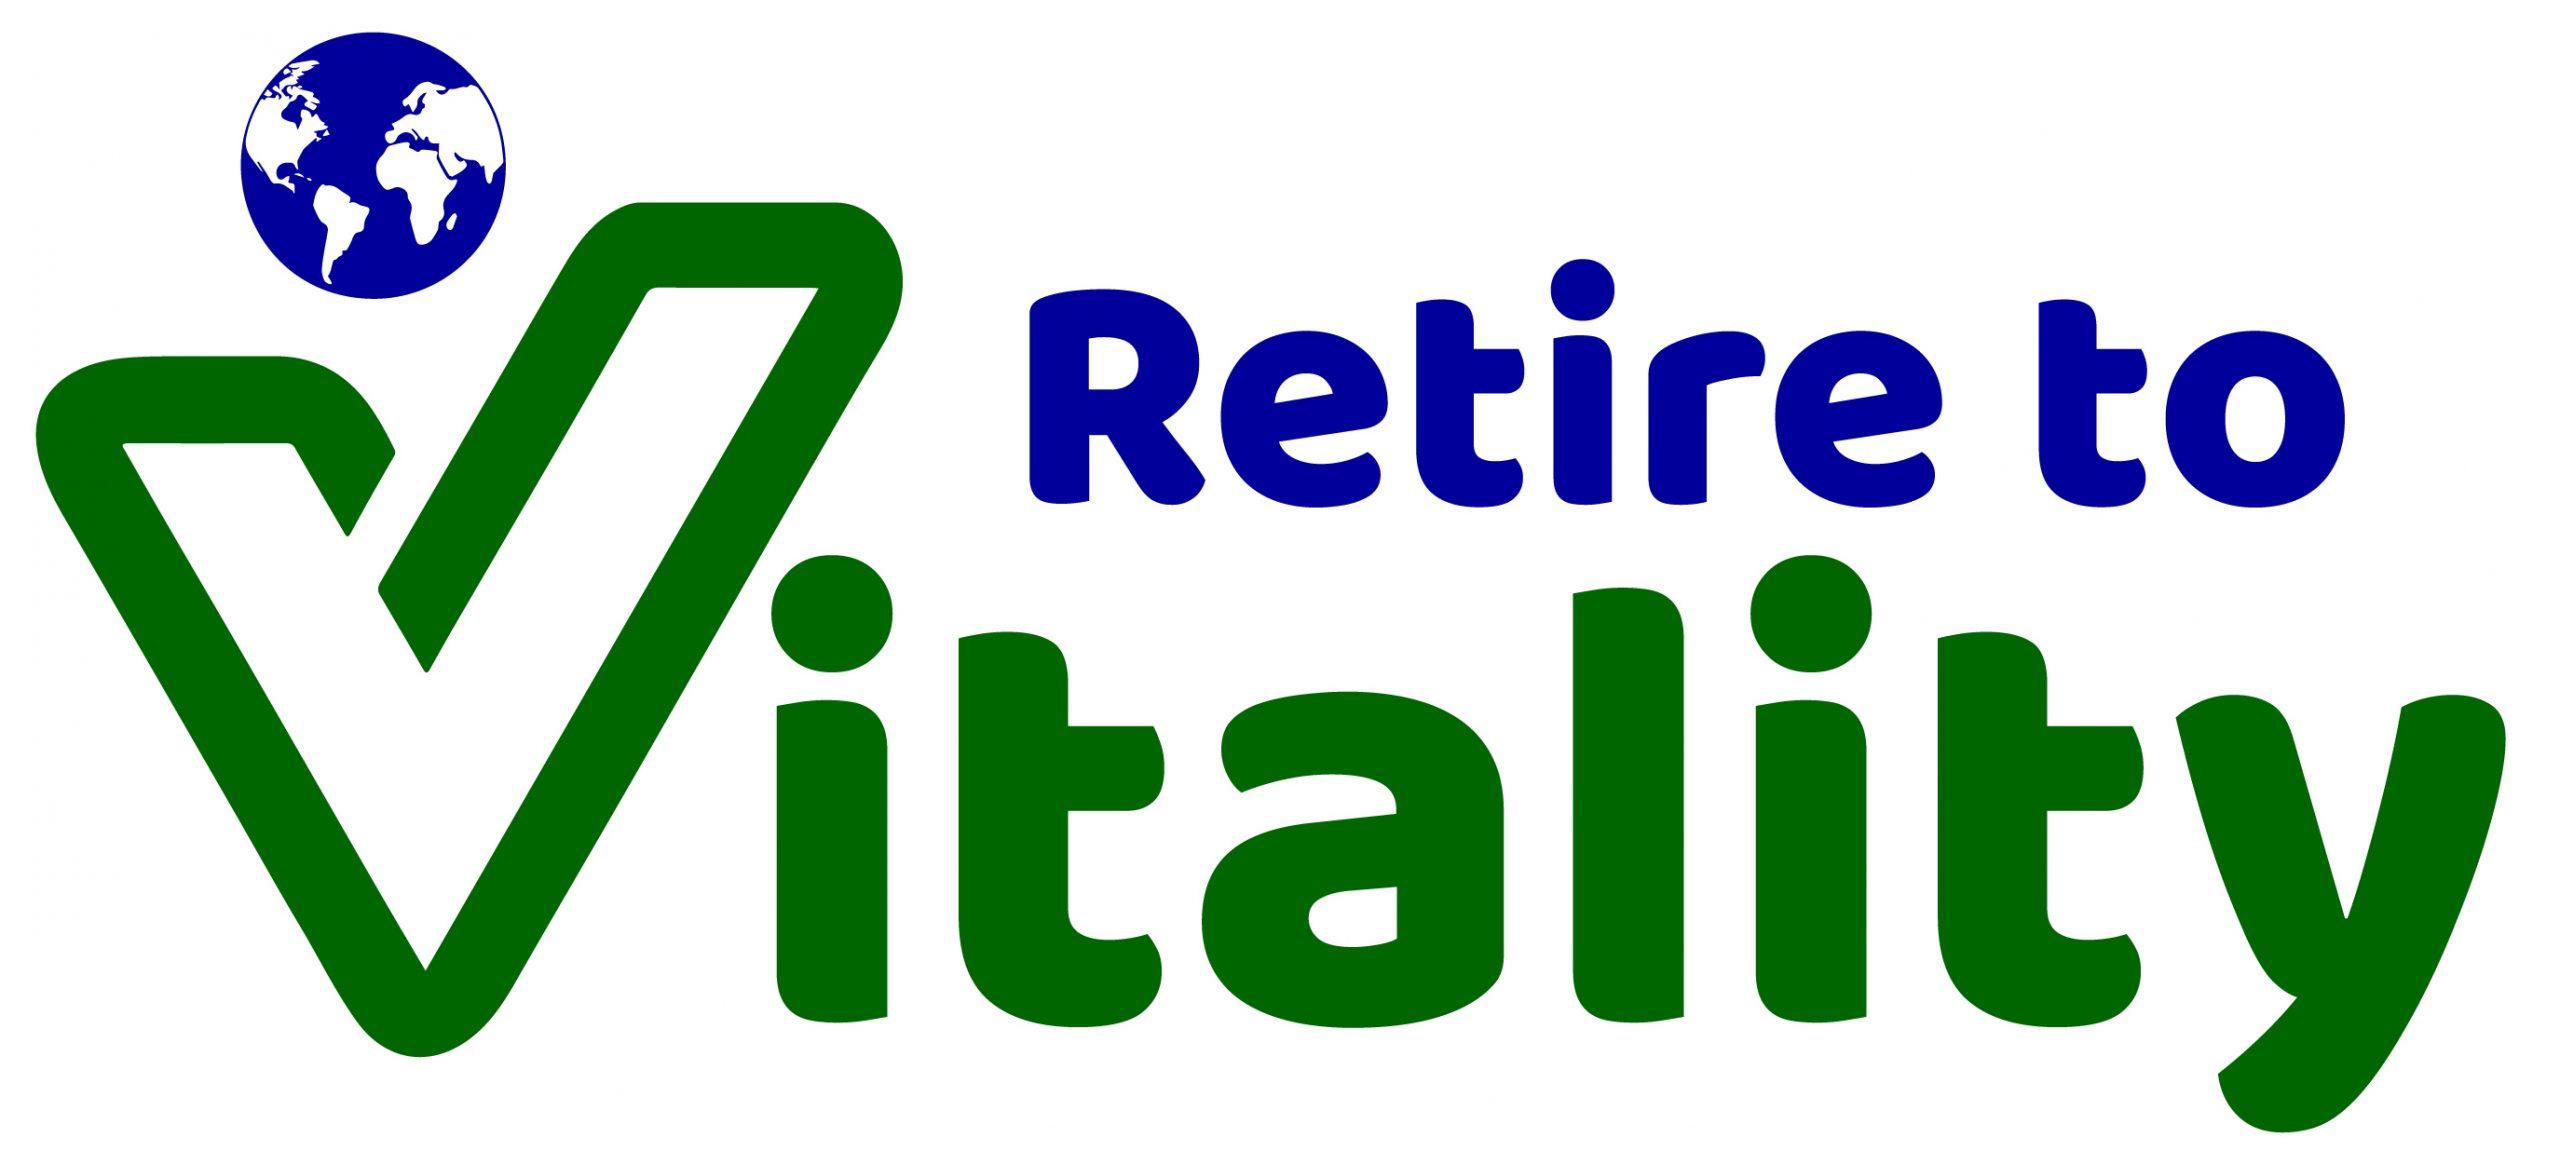 Retirement Vital Signs